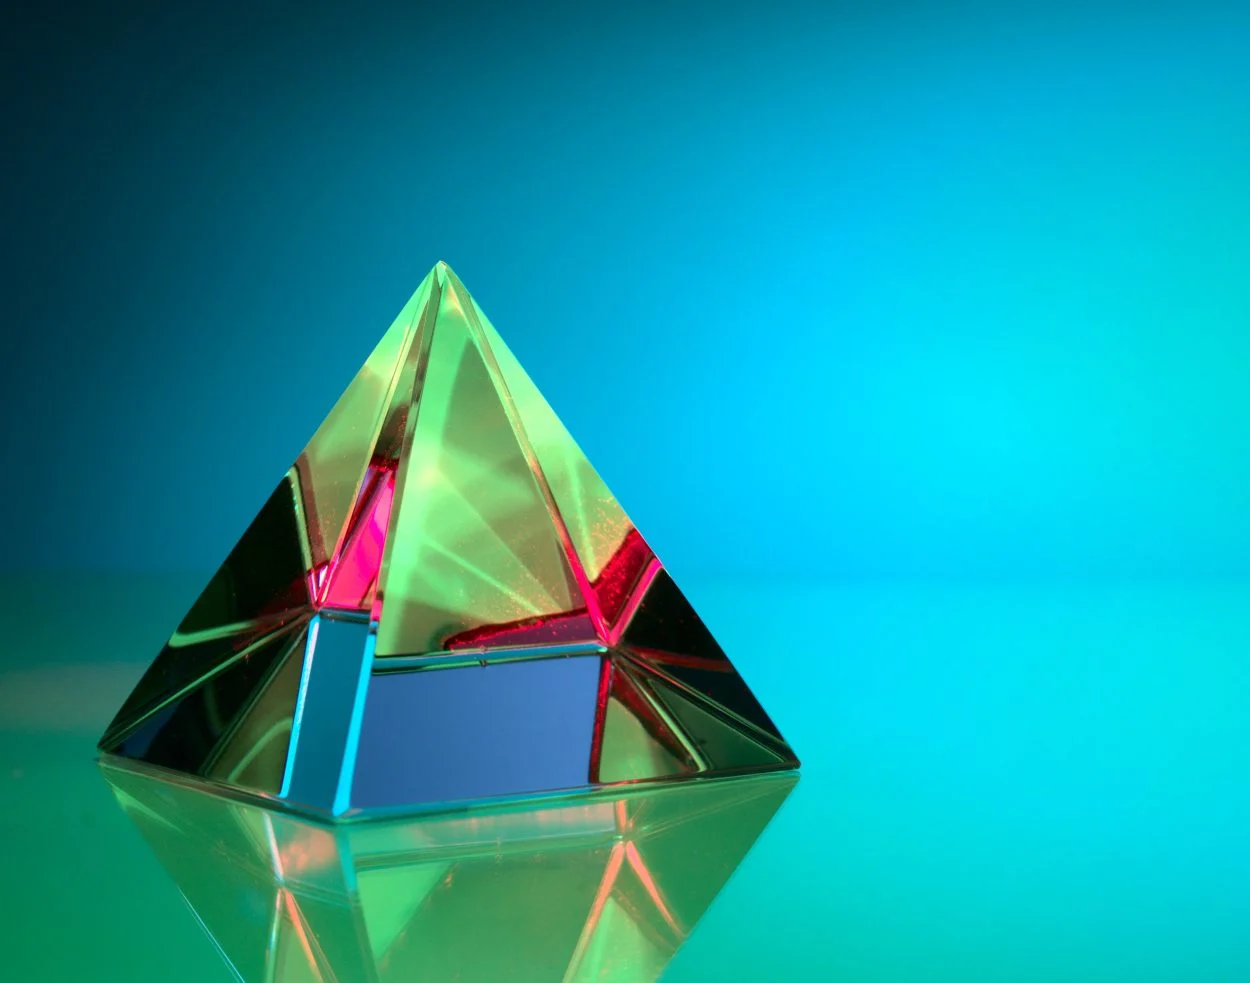 a glass pyramid